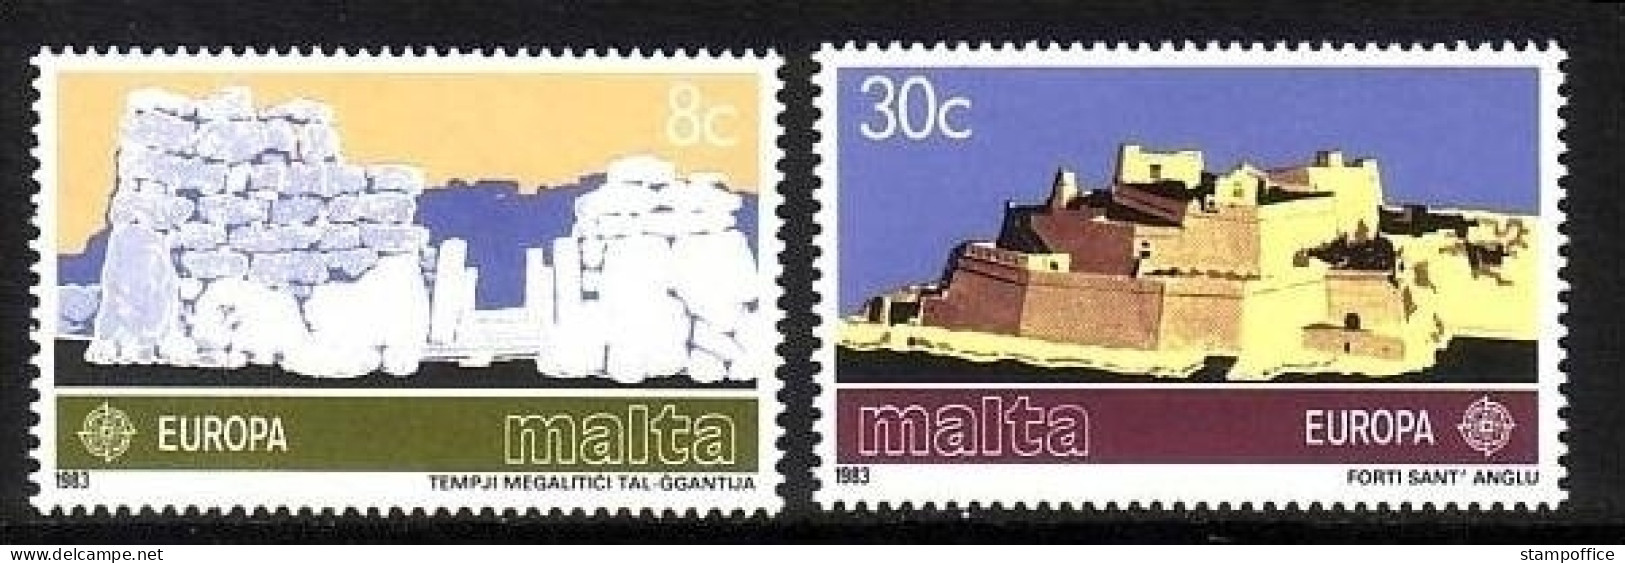 MALTA MI-NR. 680-681 POSTFRISCH(MINT) EUROPA 1983 GROSSE WERKE TEMPEL FORT ST. ANGELO - 1983